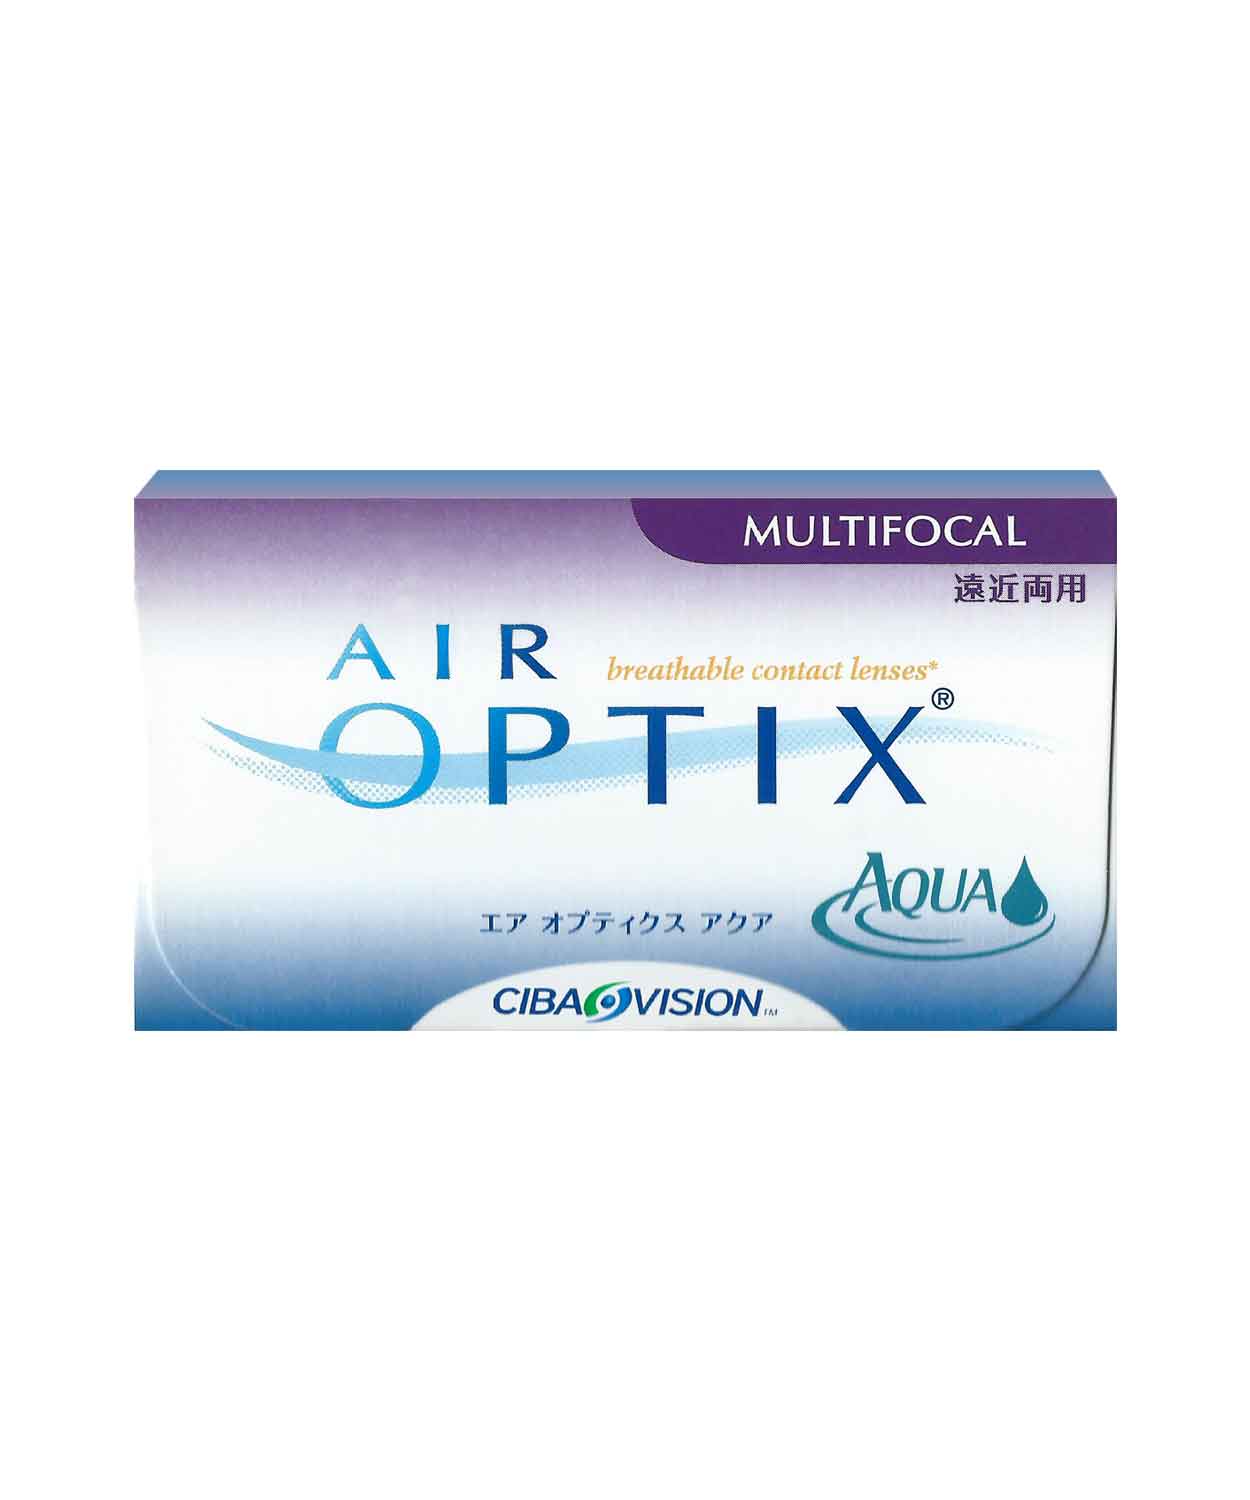 Air Optix Multifocal Subscription Contact Lens Online Shop